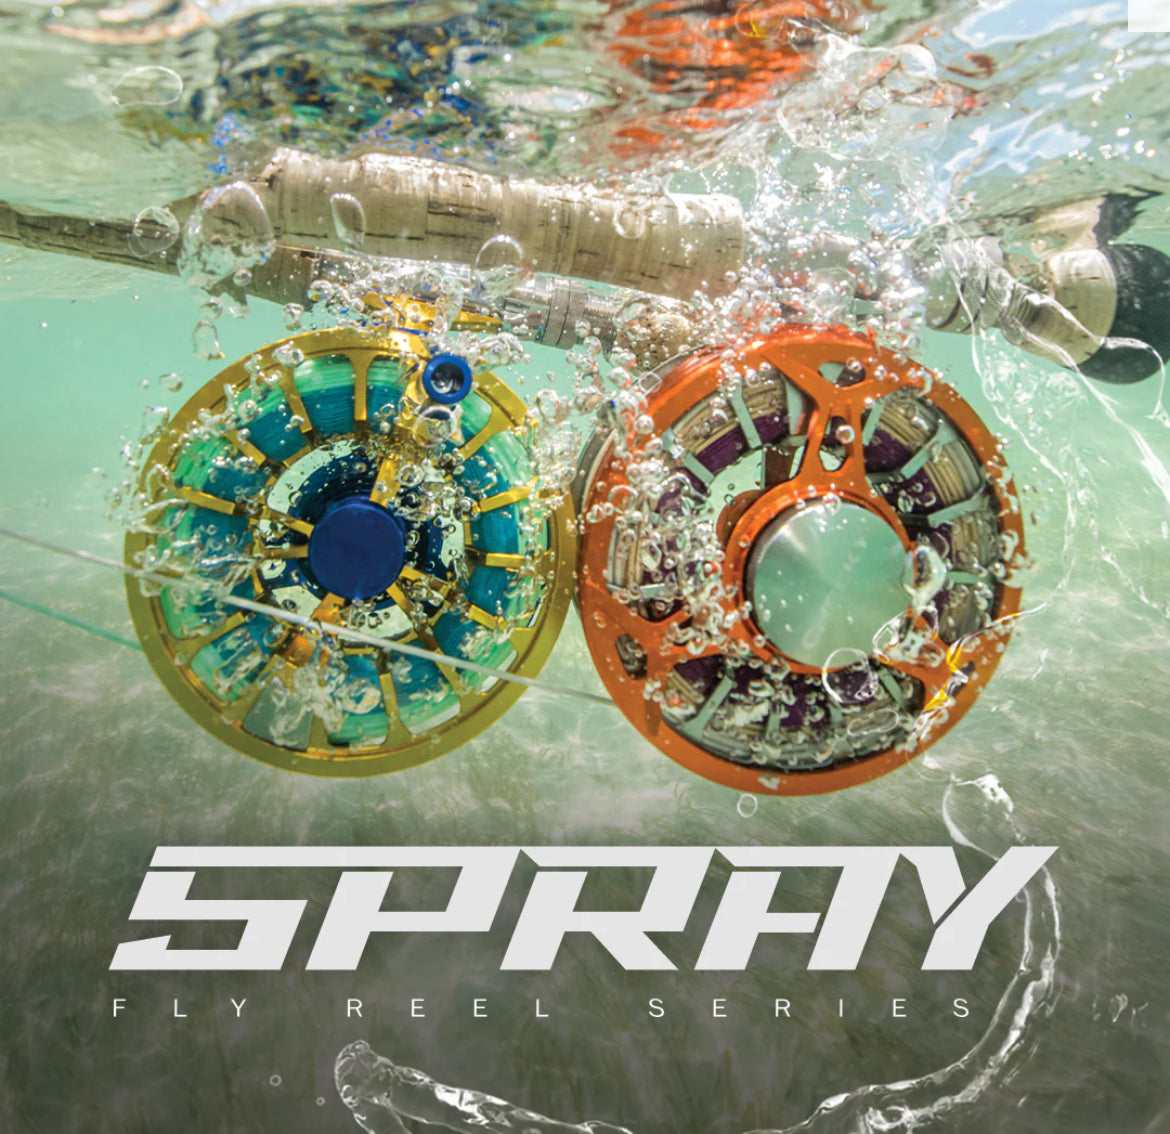 Cheeky Spray fly reel 4-6wt. Award winning reel – The Canyon Fly Shop